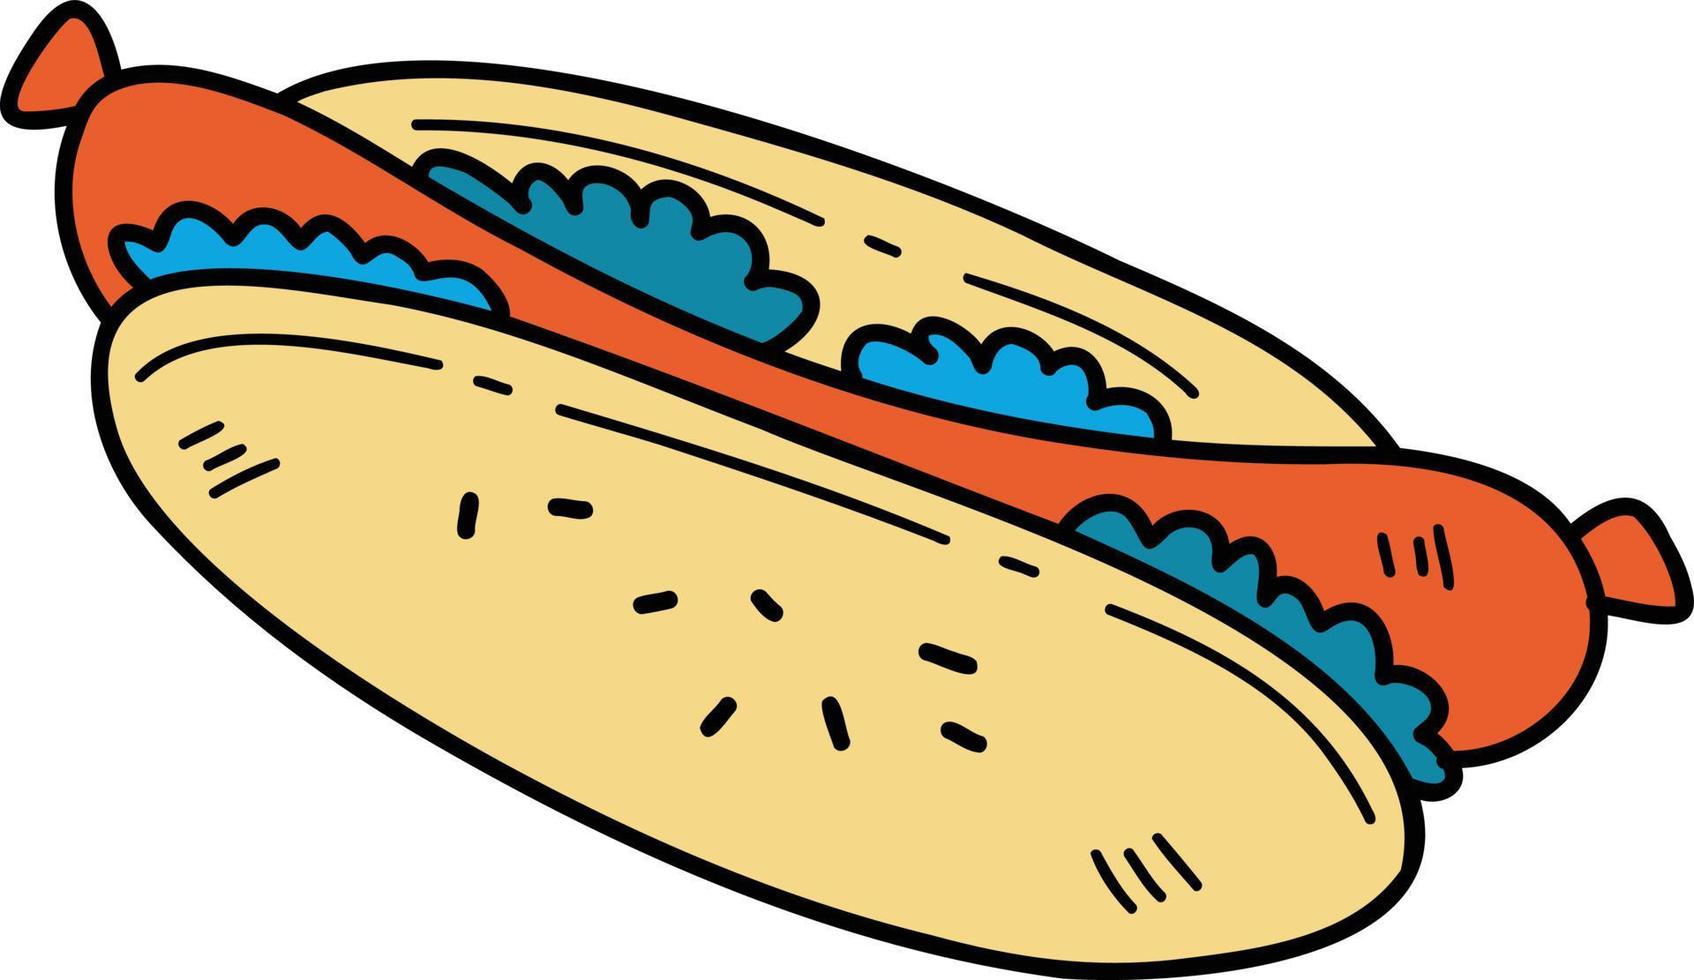 Hand Drawn delicious Hot Dog Bread illustration vector